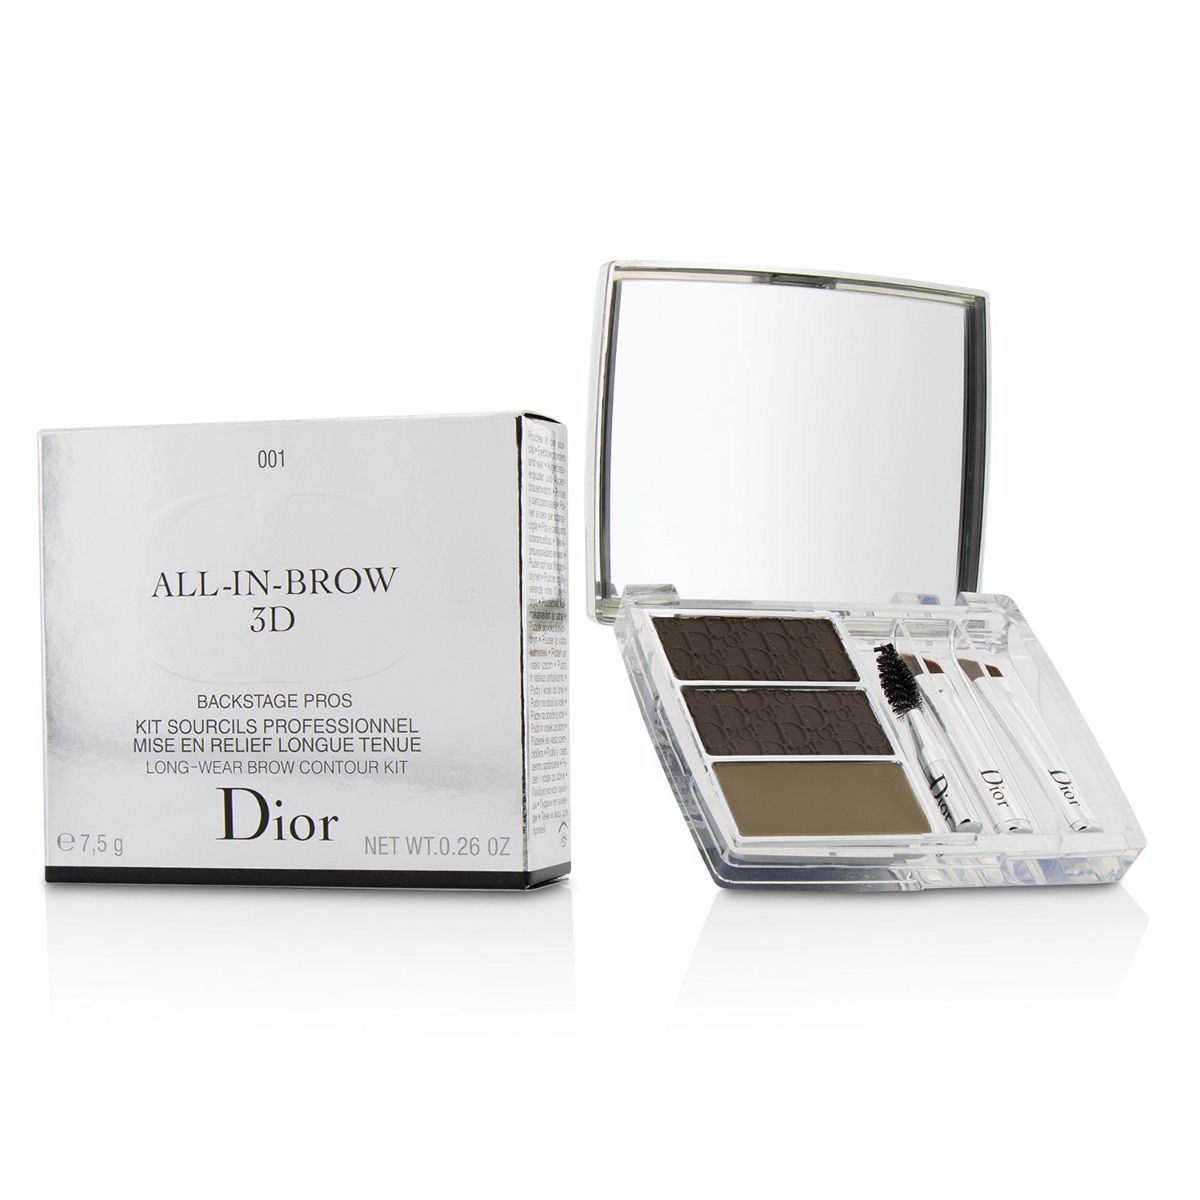 All In Brow 3D Long Wear Brow Contour Kit (2x Eyebrow Powder 1x Eyebrow Wax 3x Mini Applicator) - # 001 Brown Christian Dior Image